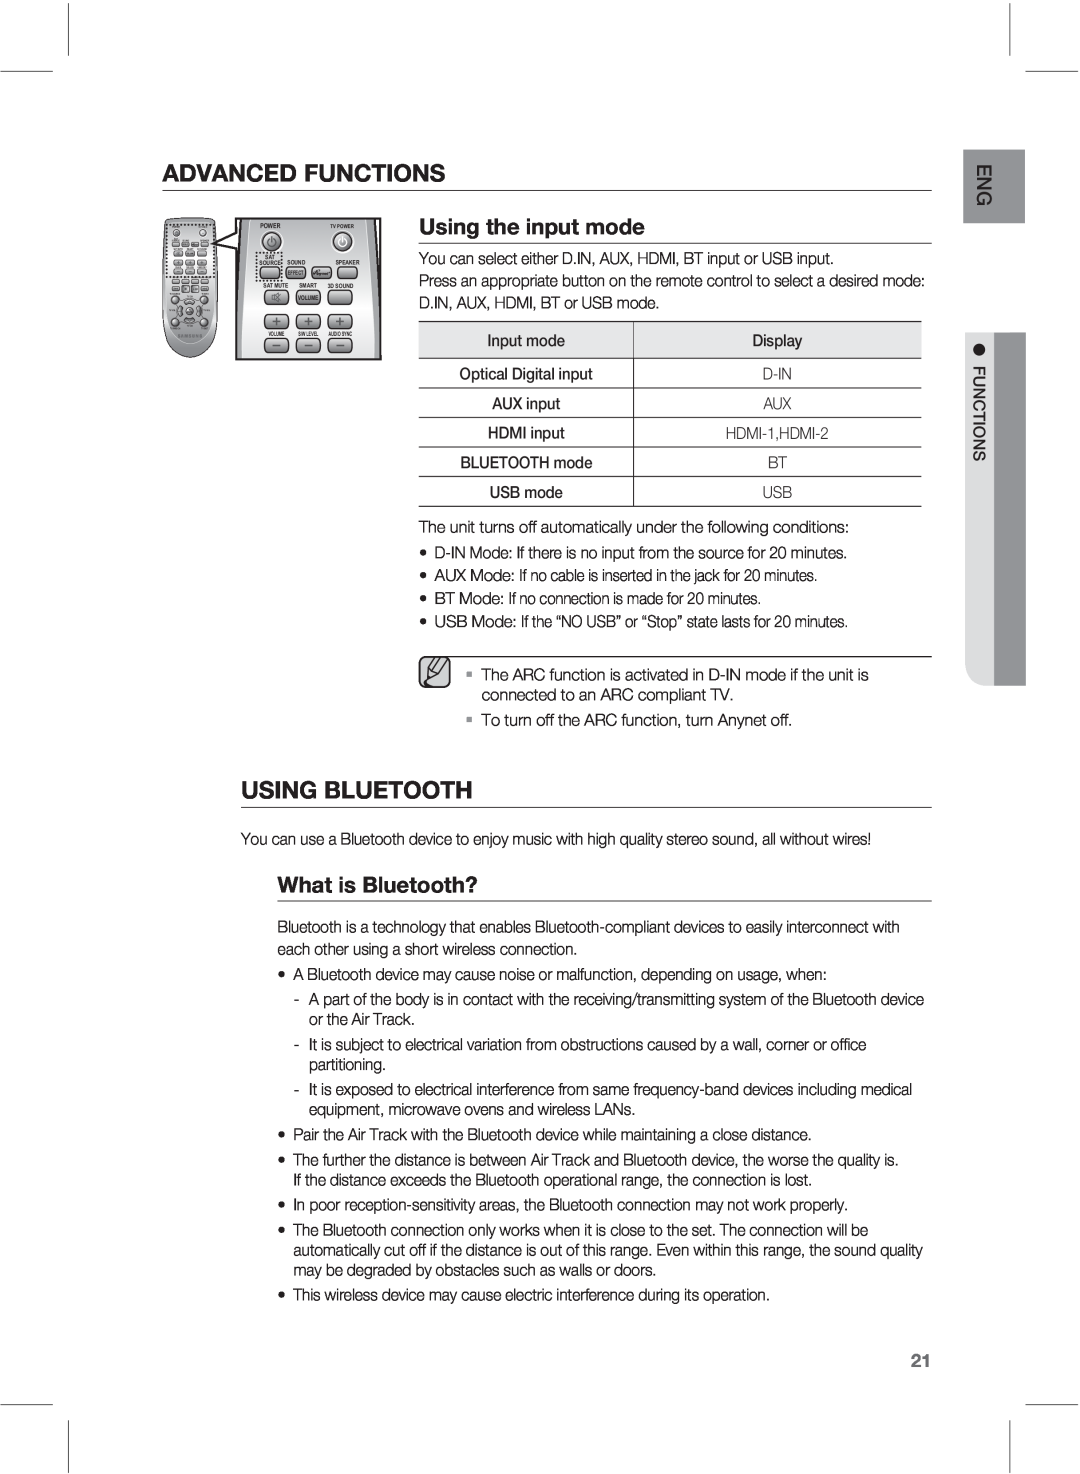 Samsung HWE550 manual 7/$&%6/$5*0/4, 64*/#-6&5005, 8IBUJT#MVFUPPUI, 6TJOHUIFJOQVUNPEF, Jtqmbz 